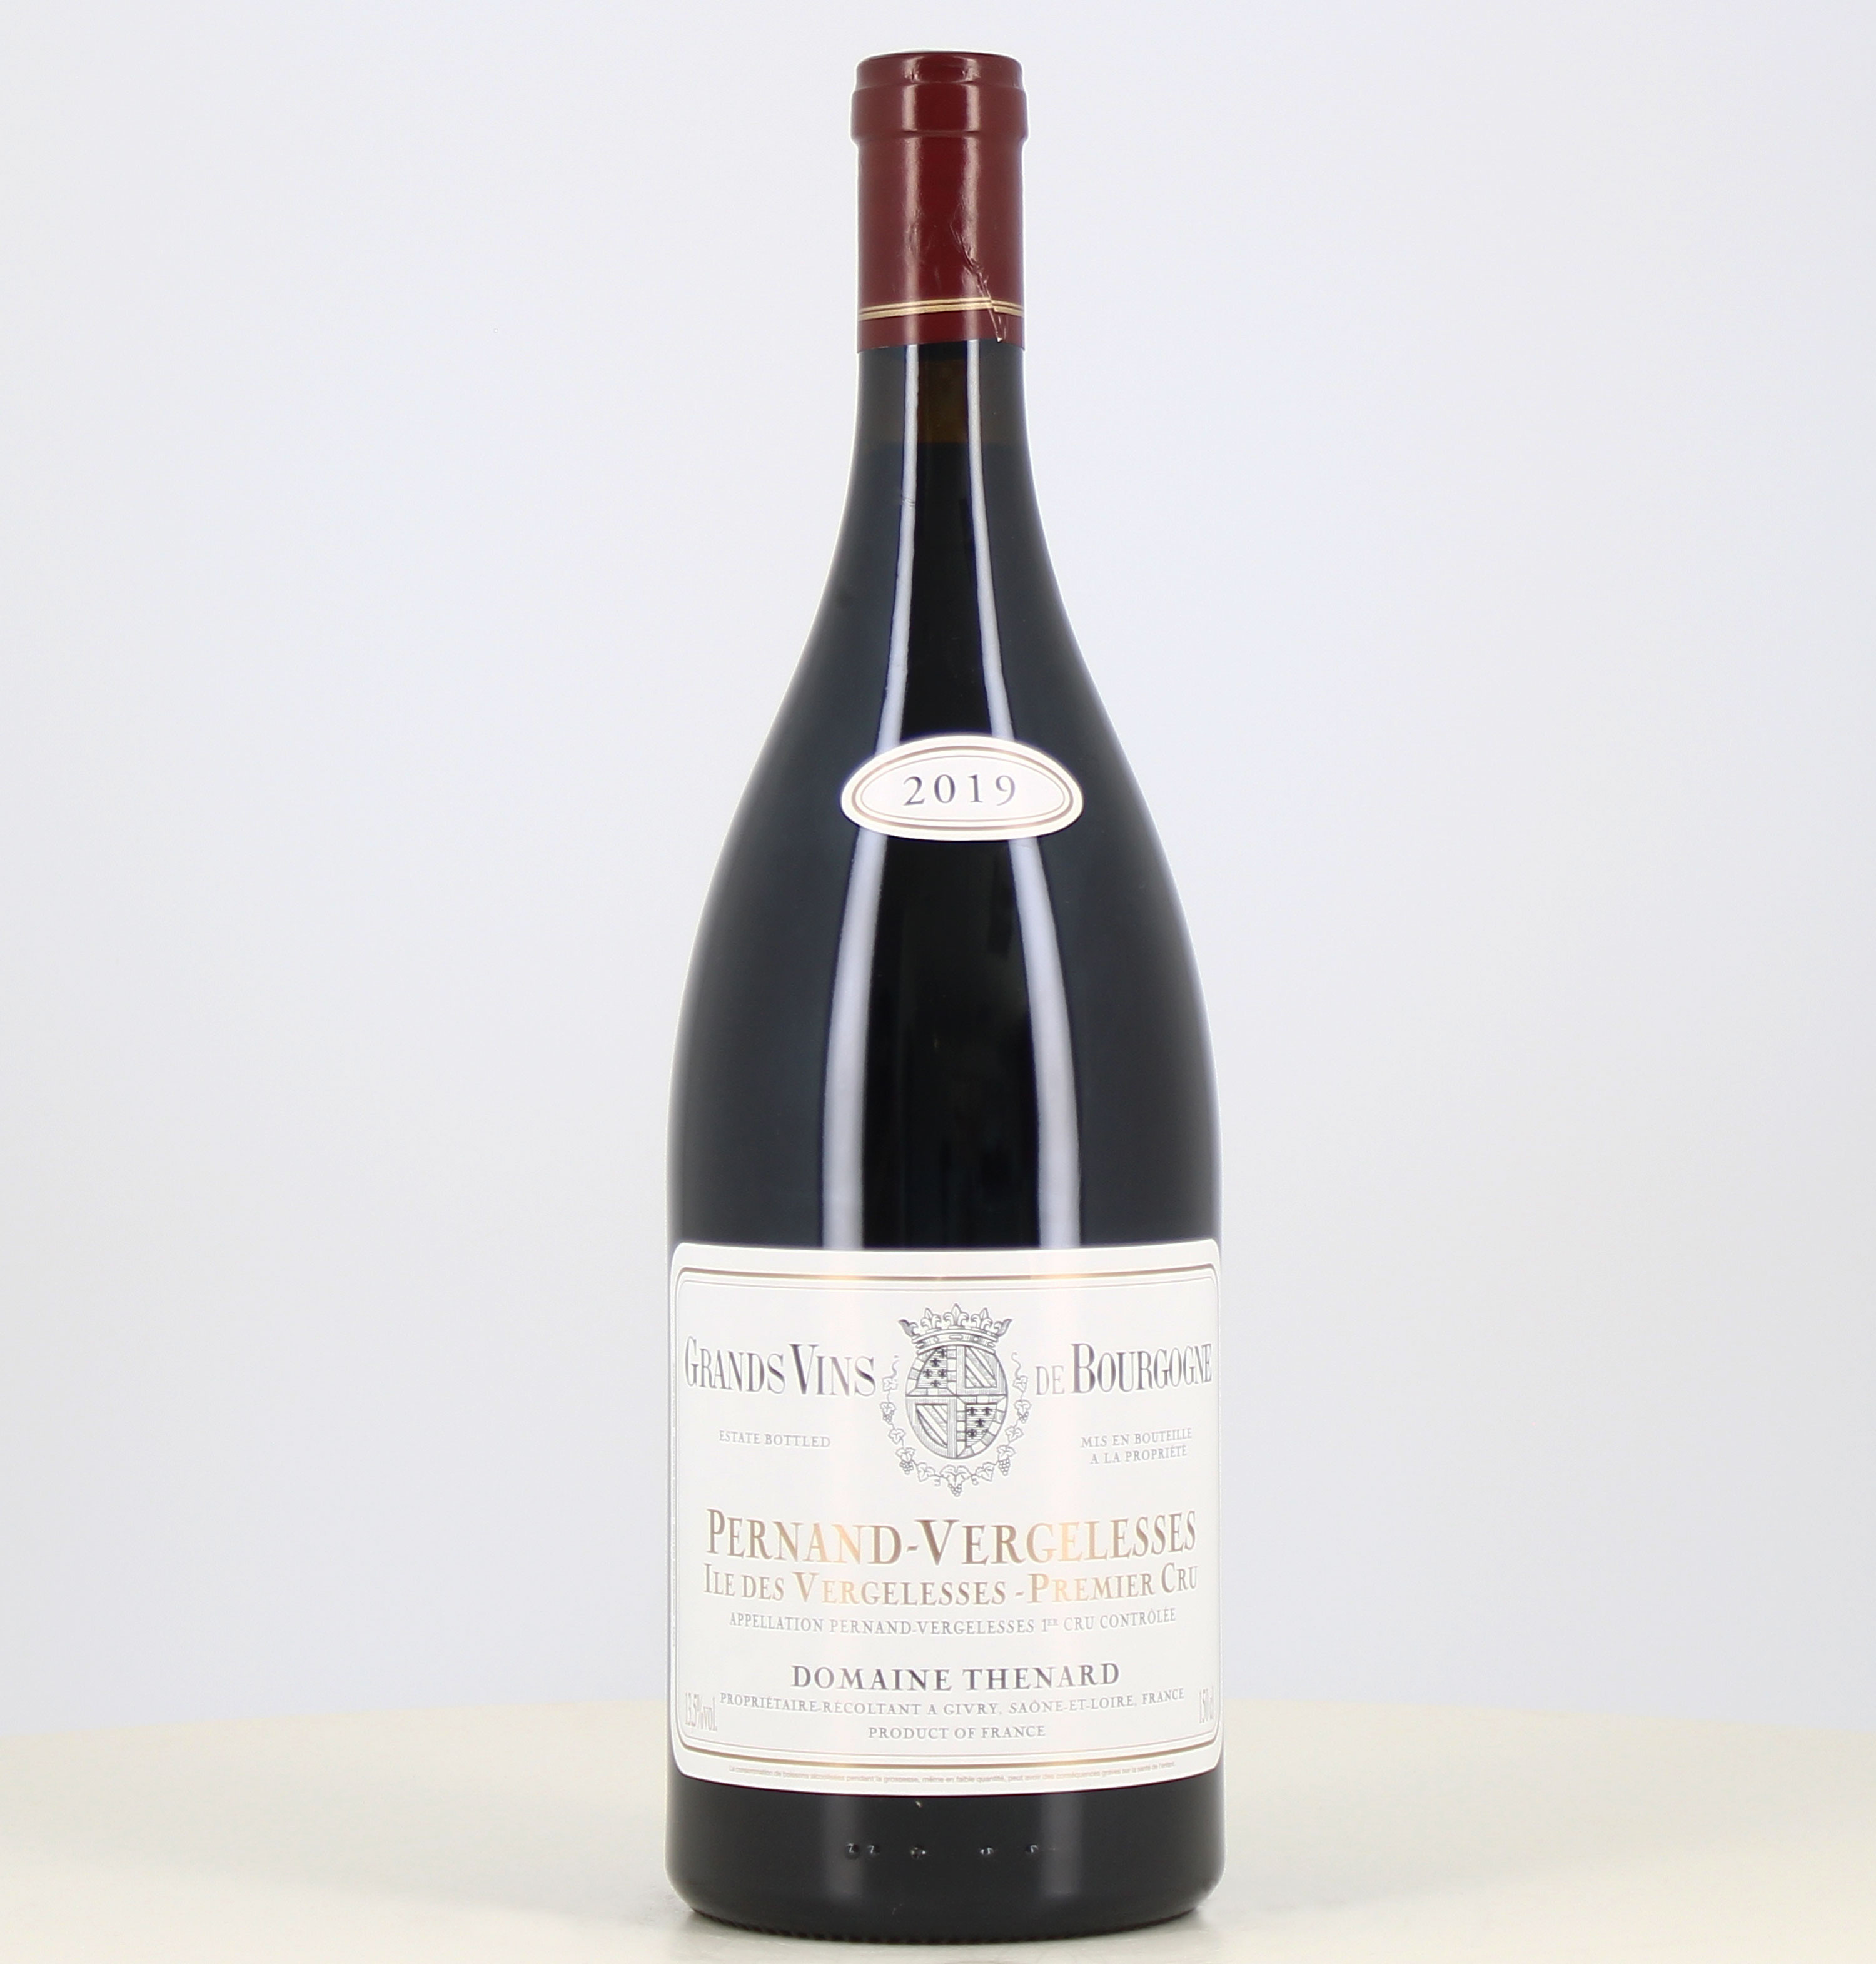 Magnum de vino blanco Pernand-Vergelesse 1er cru Île des Vergelesse domaine thenard 2019 